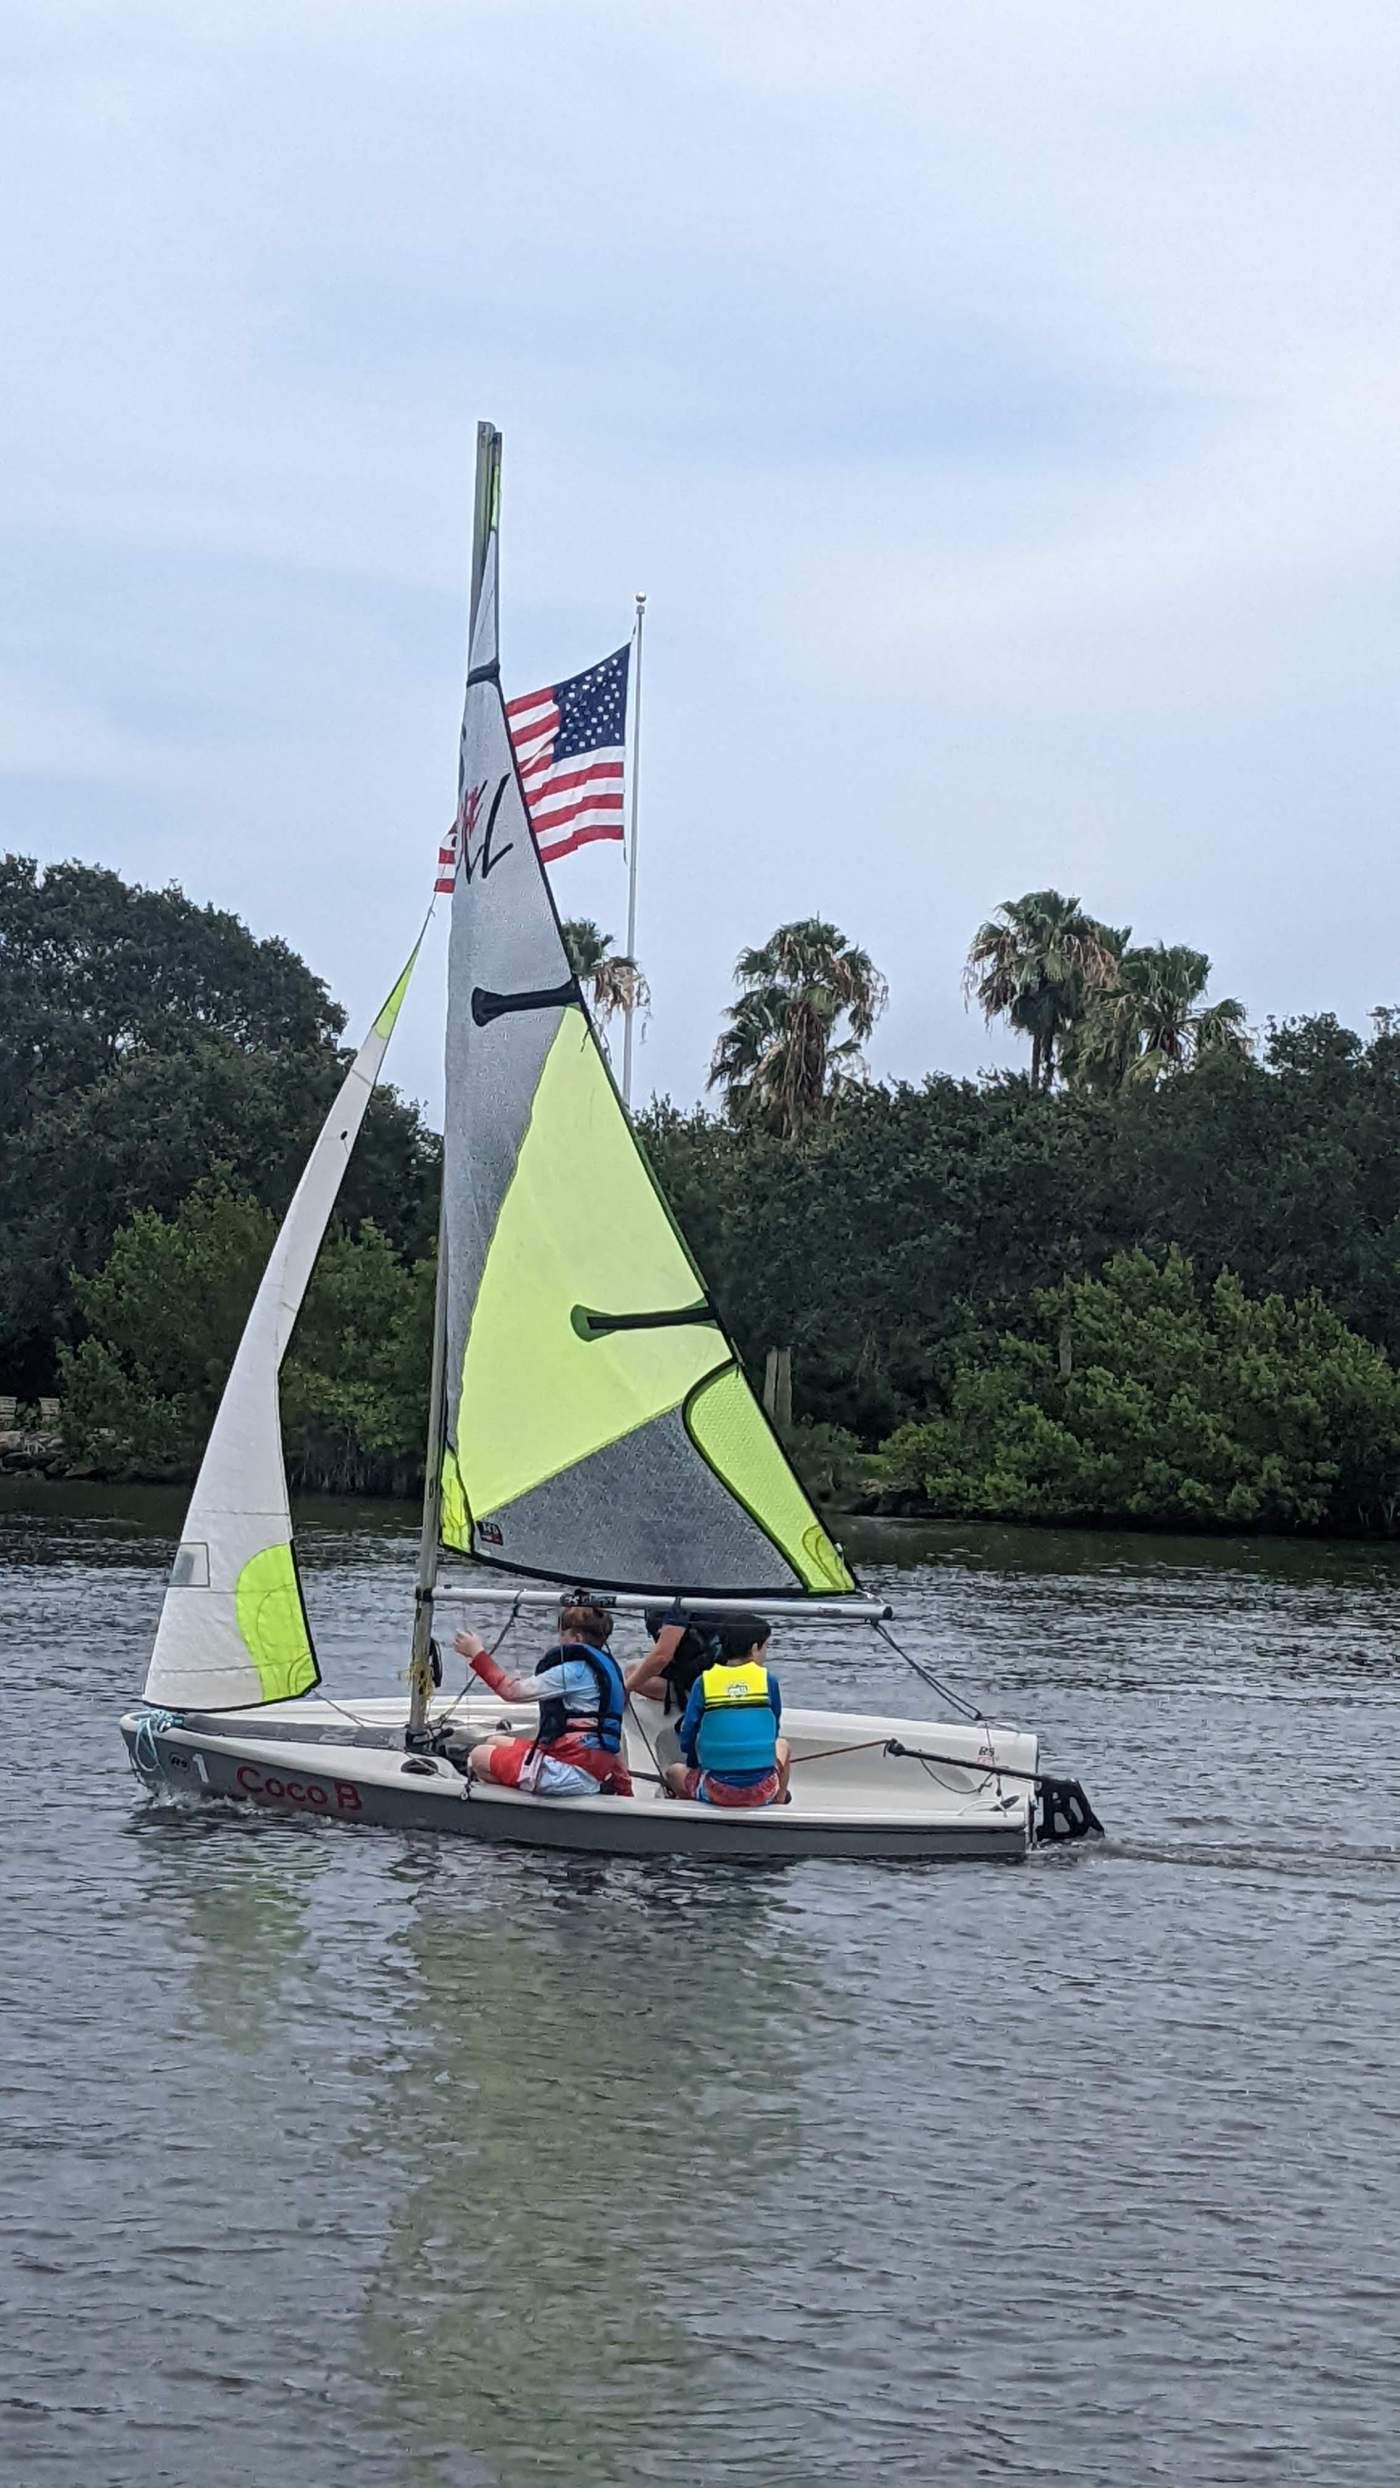 A sailboat sailing past an American flag